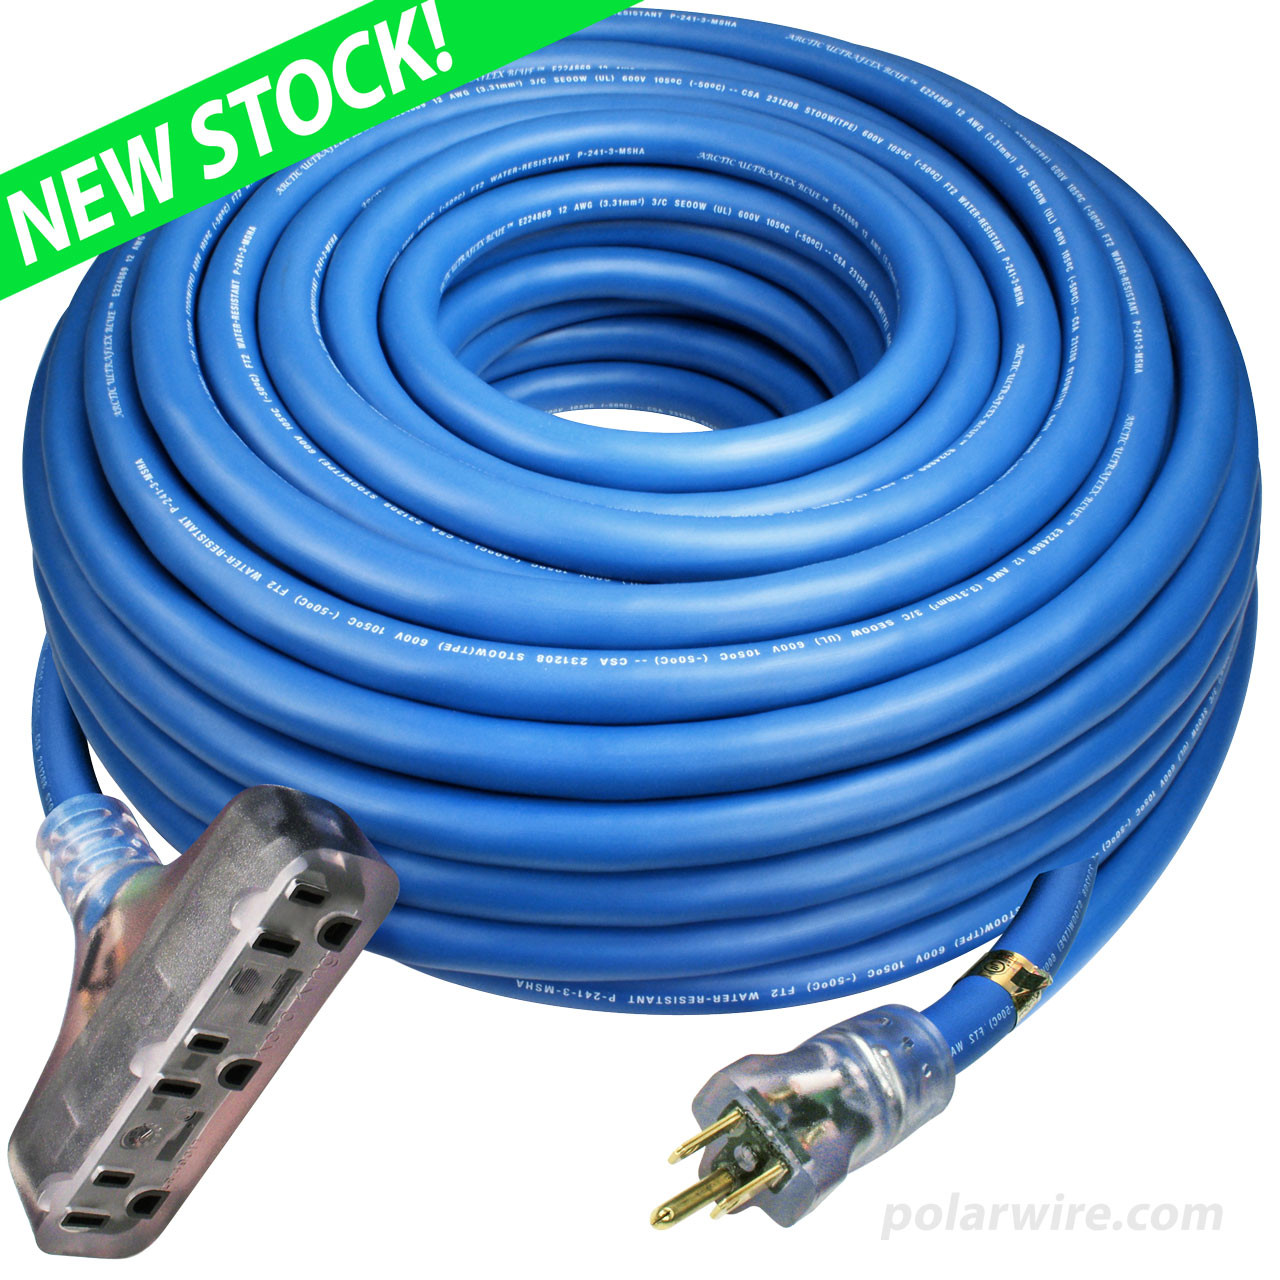 100 foot 12 gauge Arctic Ultraflex Blue extension cord t-style triple outlet NEMA 5-15 lighted power cord